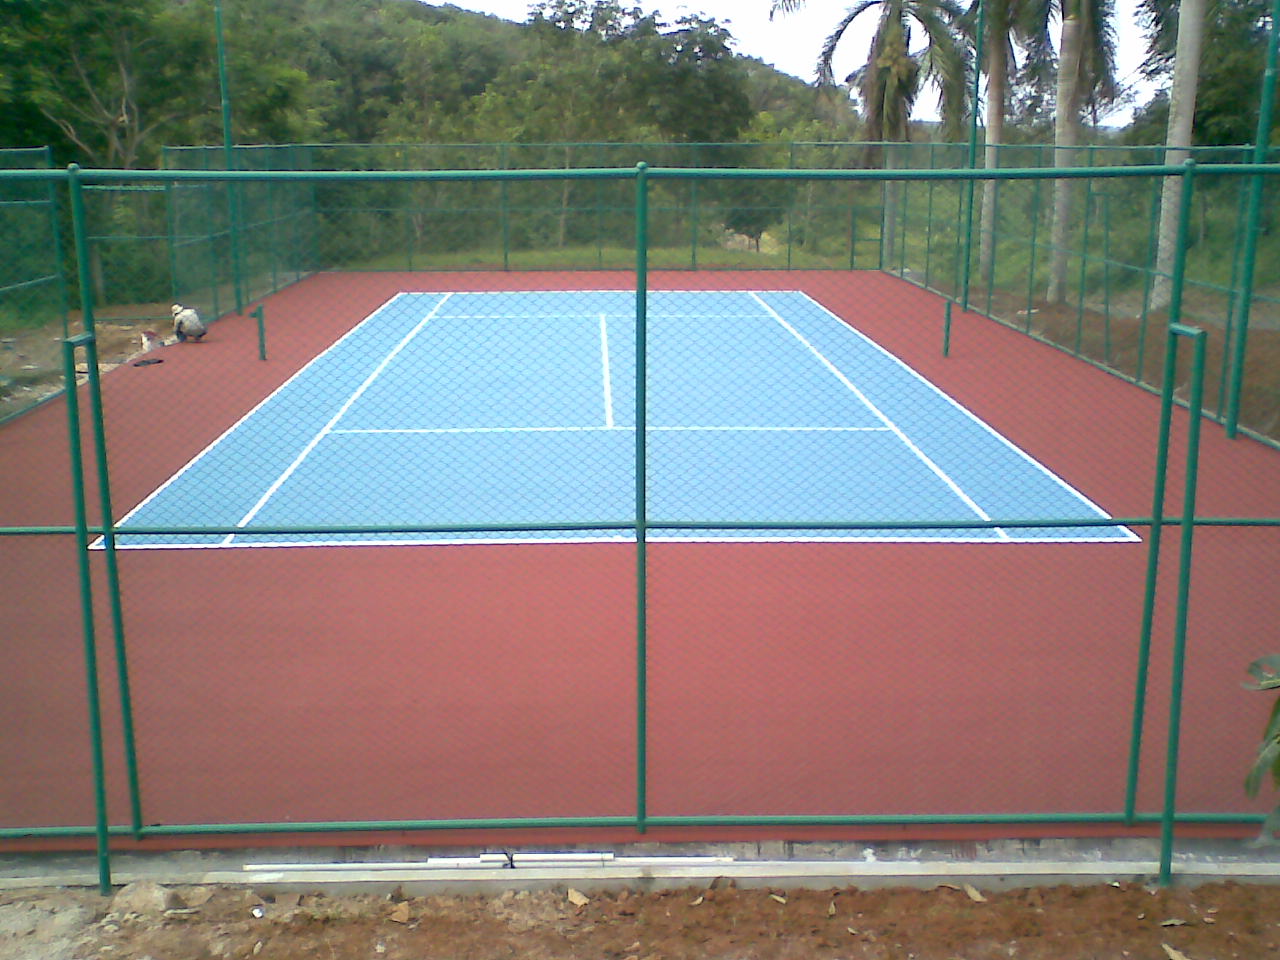  LAPANGAN  TENIS  gambar  proses pembuatan lapangan  tennis 